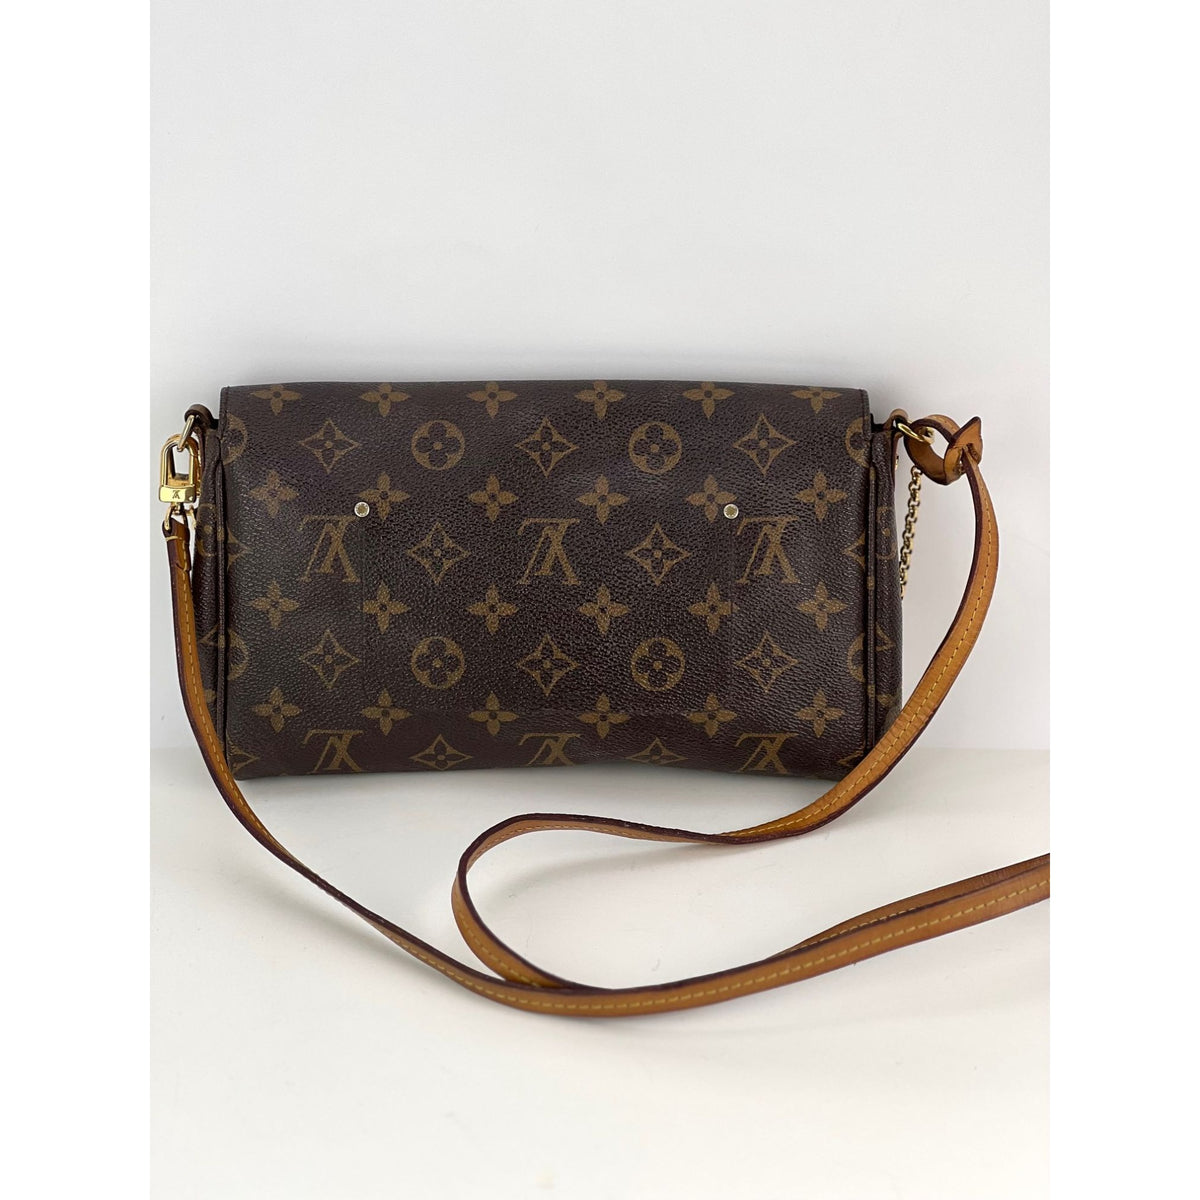 Shop for Louis Vuitton Monogram Canvas Leather Tango Crossbody Bag